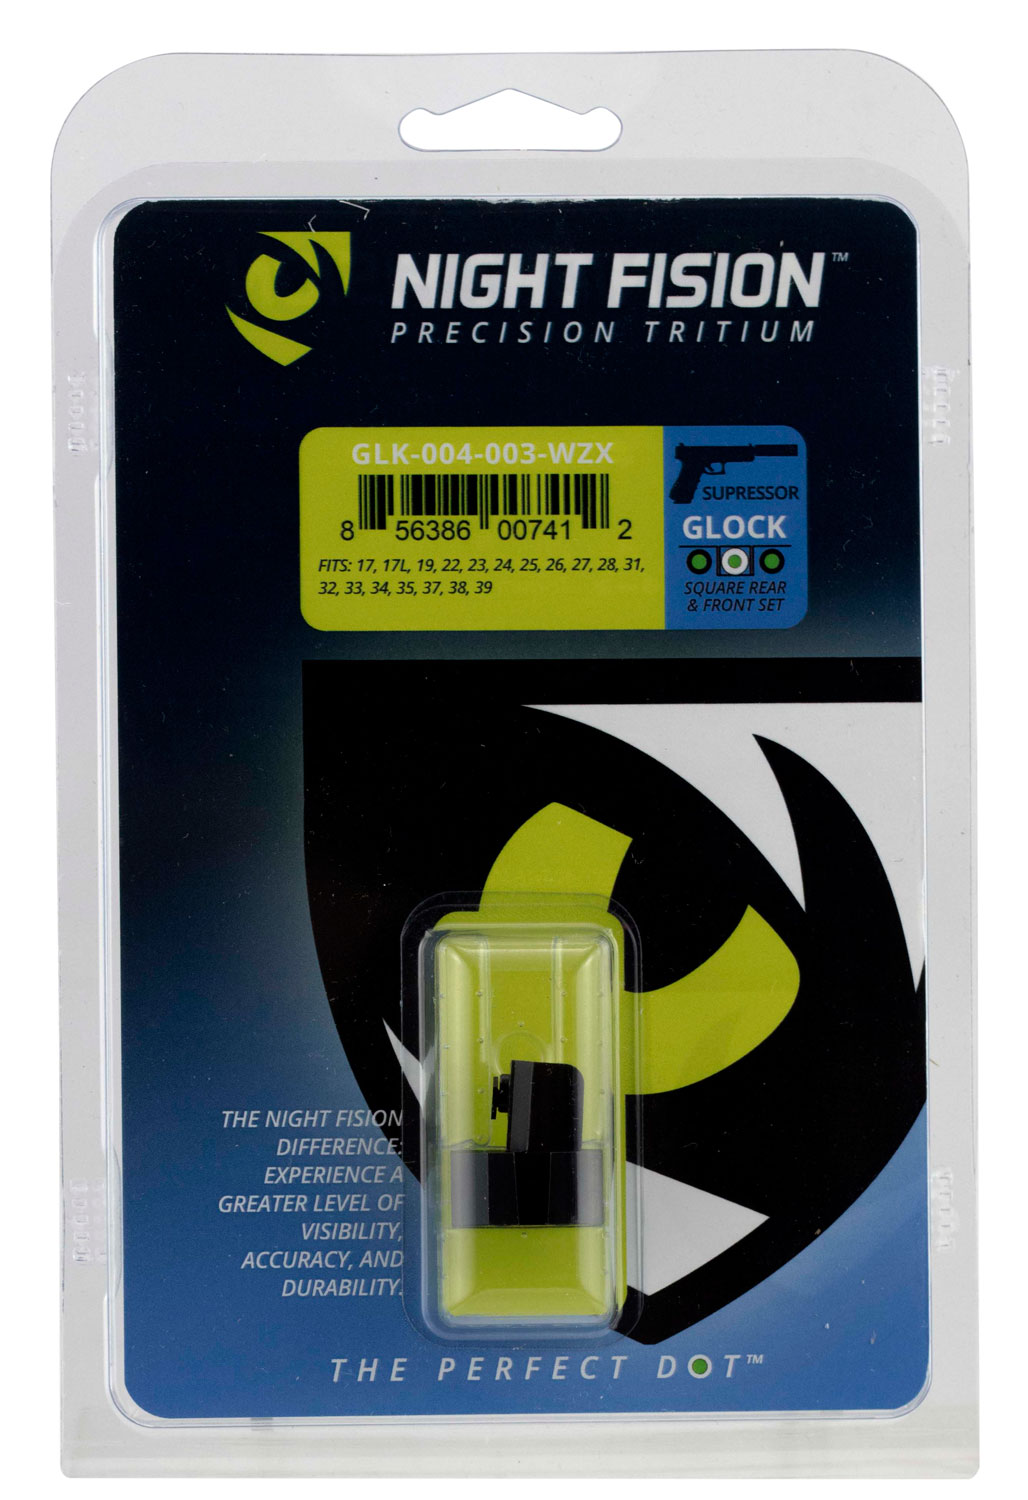 Night Fision Glock Suppressor Height Tritium Night Sight Set - White Front | Black Square Notch Rear | Fits Glock 17, 17L, 19, 22, 23, 24, 25, 26, 27, 28, 31, 32, 33, 34, 35, 37, 38, 39, 20, 21, 29, 30, 36, 40, 41